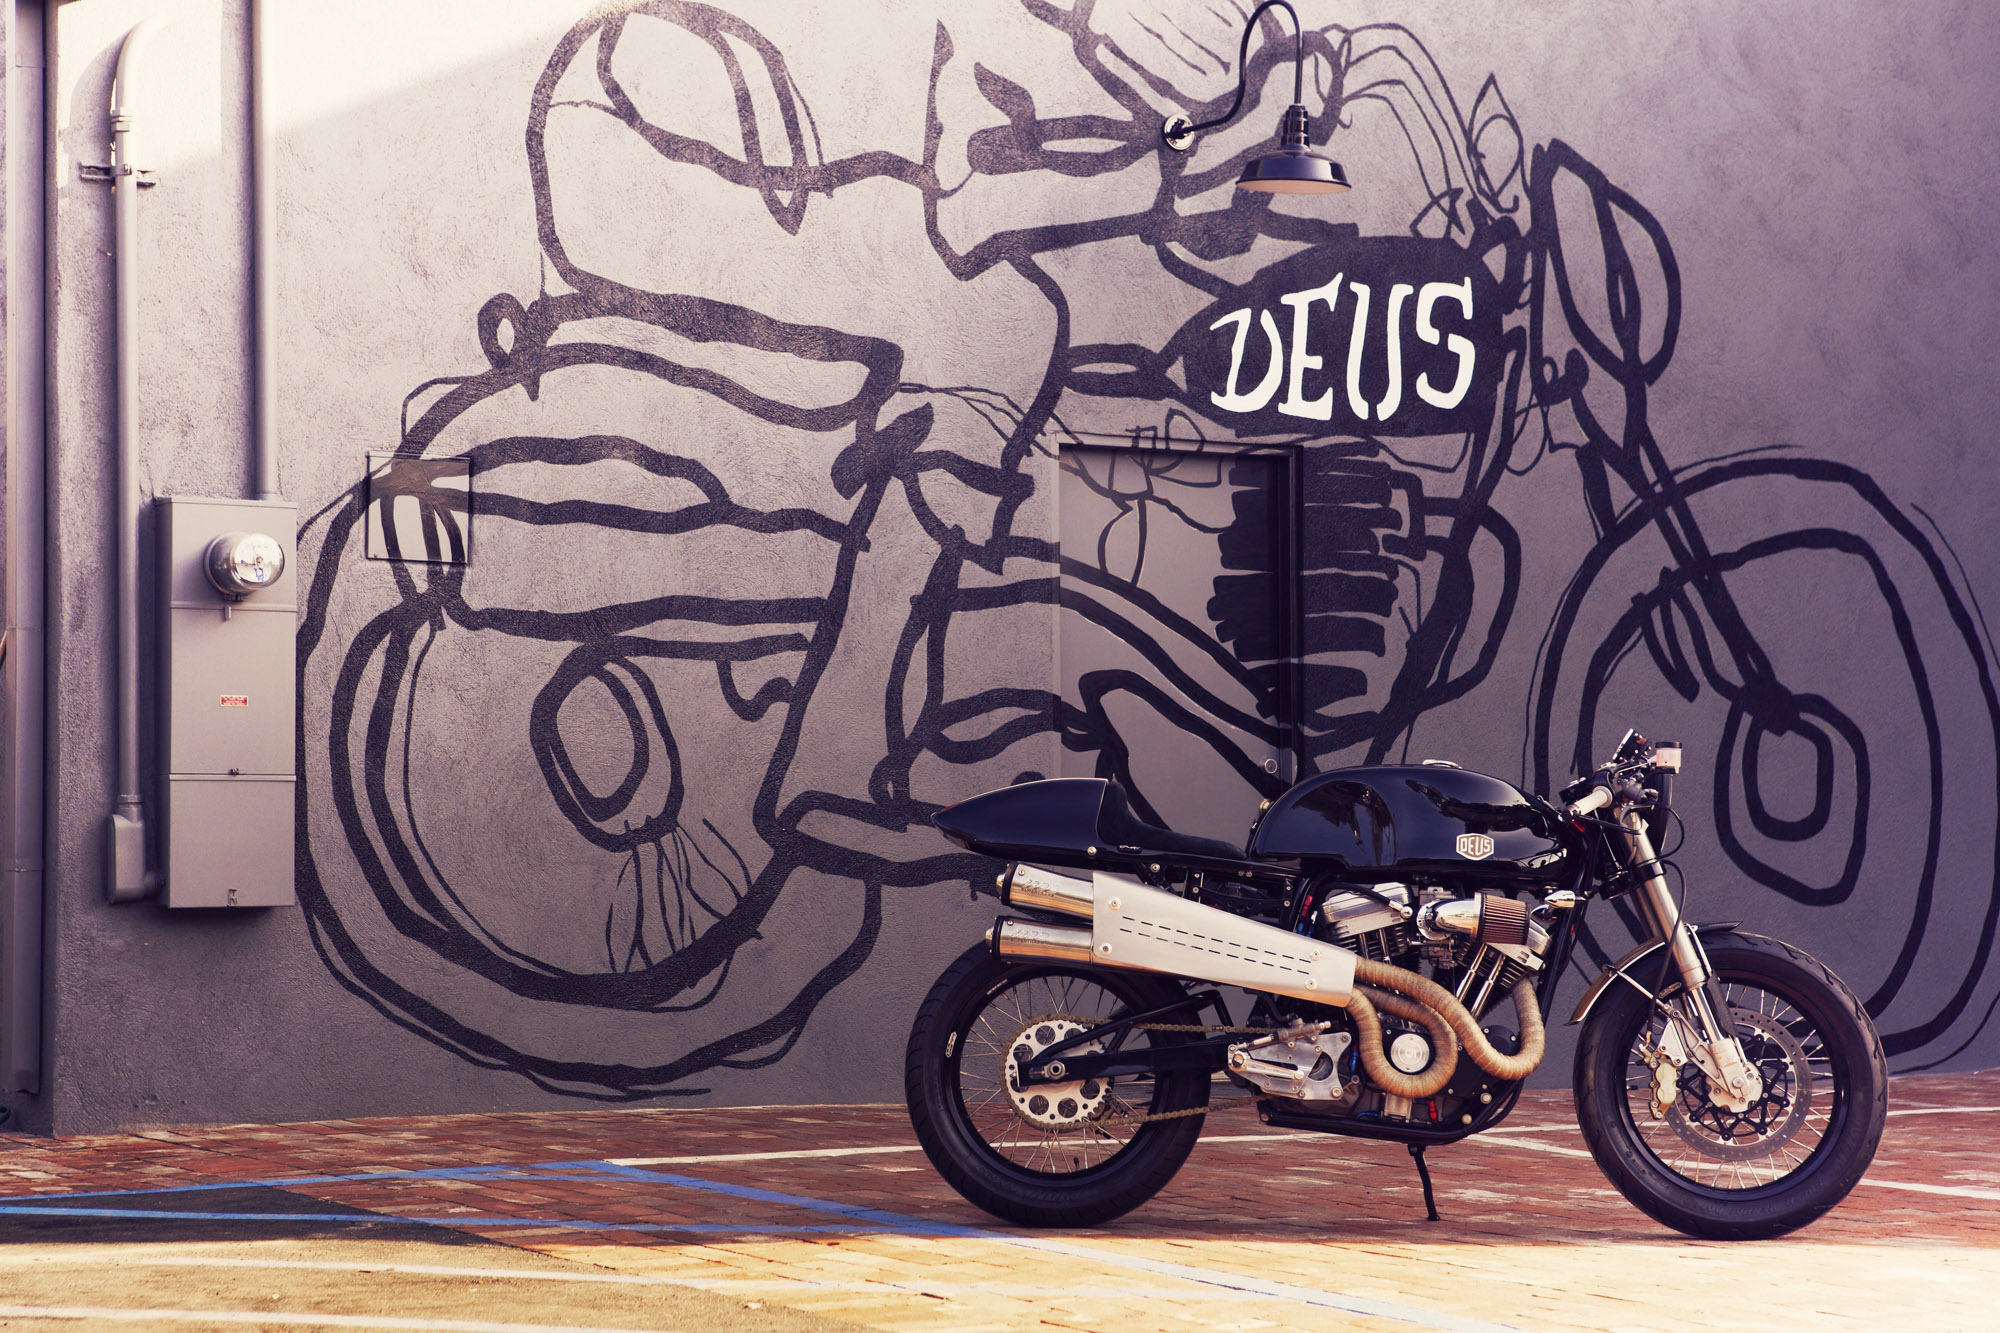 deus ex machina壁紙,自動車,オートバイ,車両,壁,ストリートアート